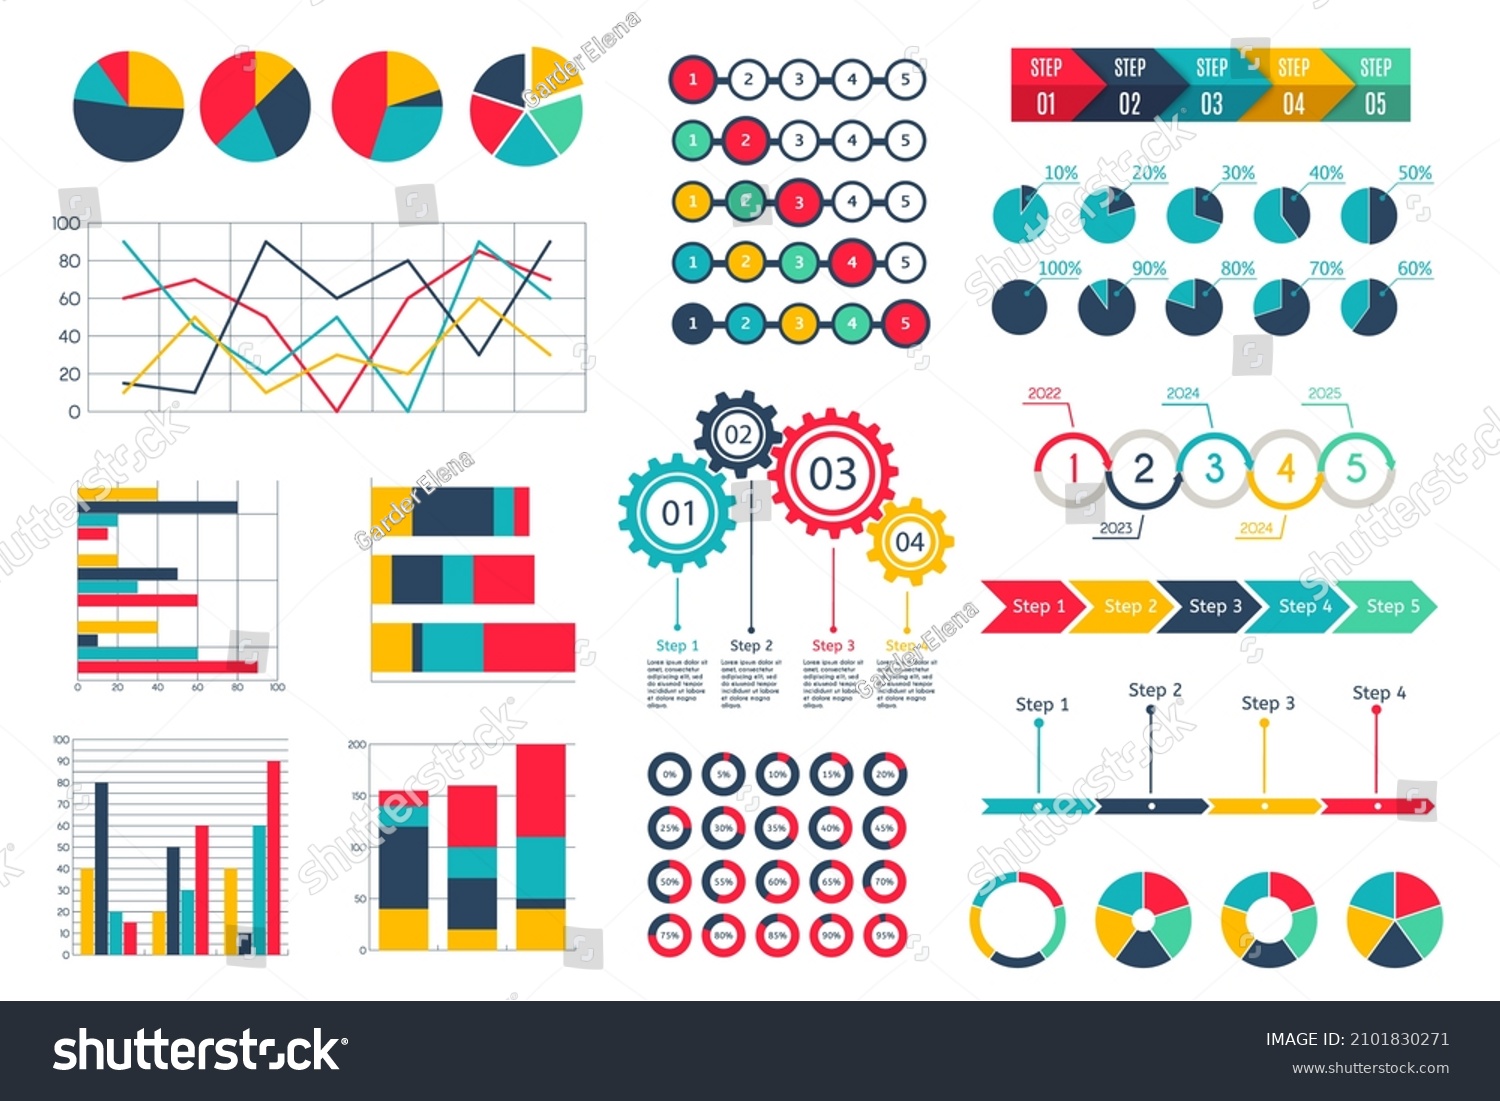 Infographic Elements Diagram Progress Bar Flat Stock Illustration ...